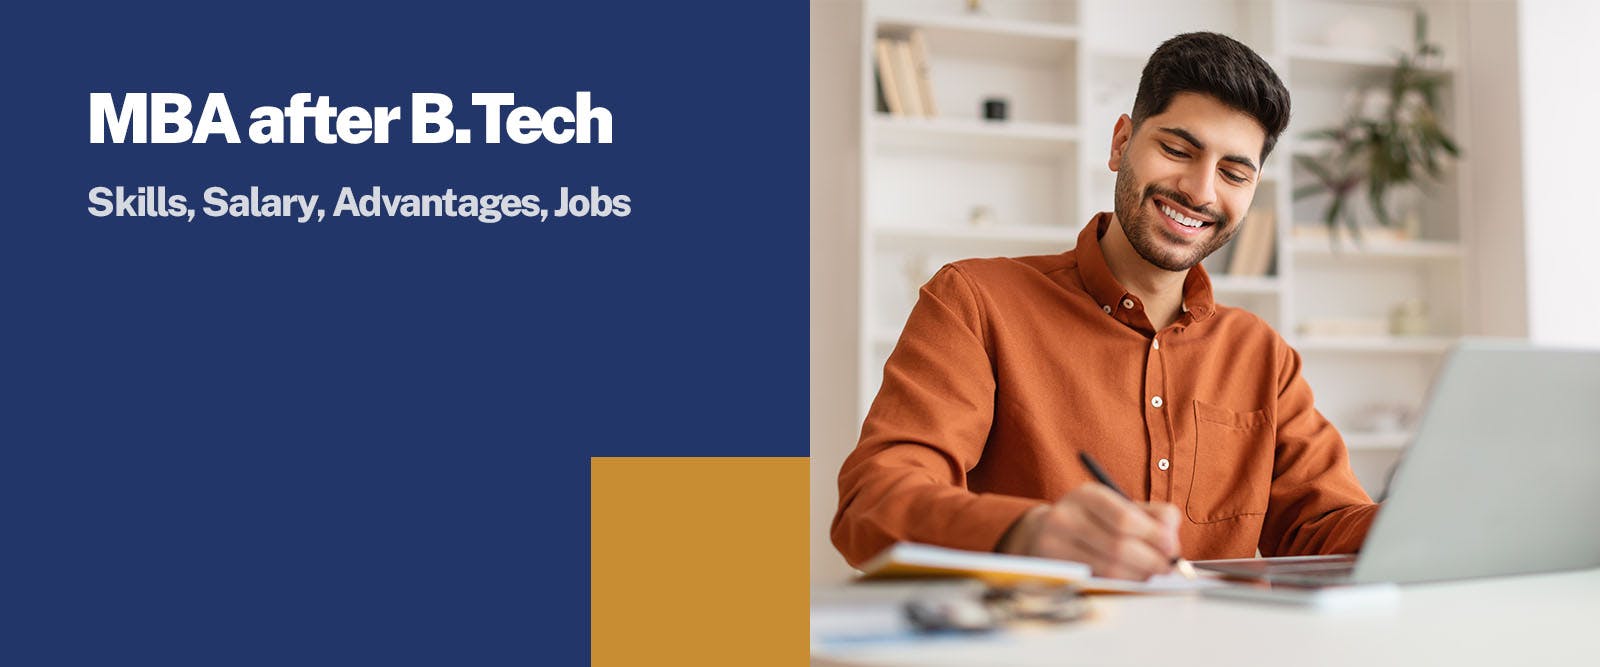 MBA after B.Tech: Skills, Salary, Advantages, Jobs